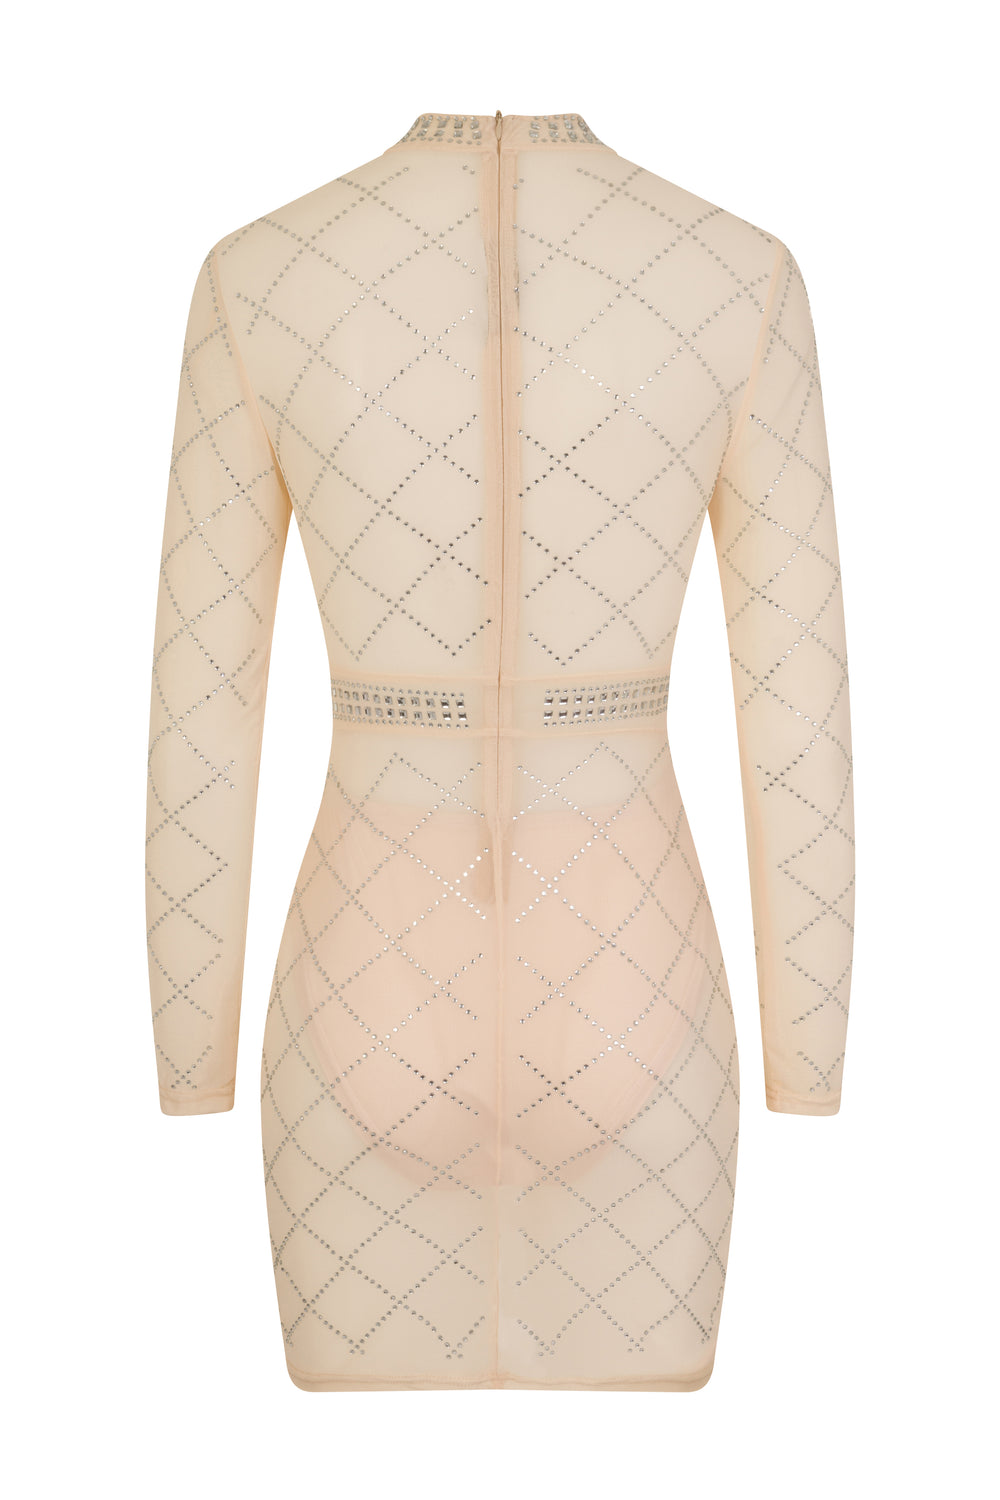 Lopez Nude Crystal Rhinestone Embellished Sheer Mesh Bodycon Dress